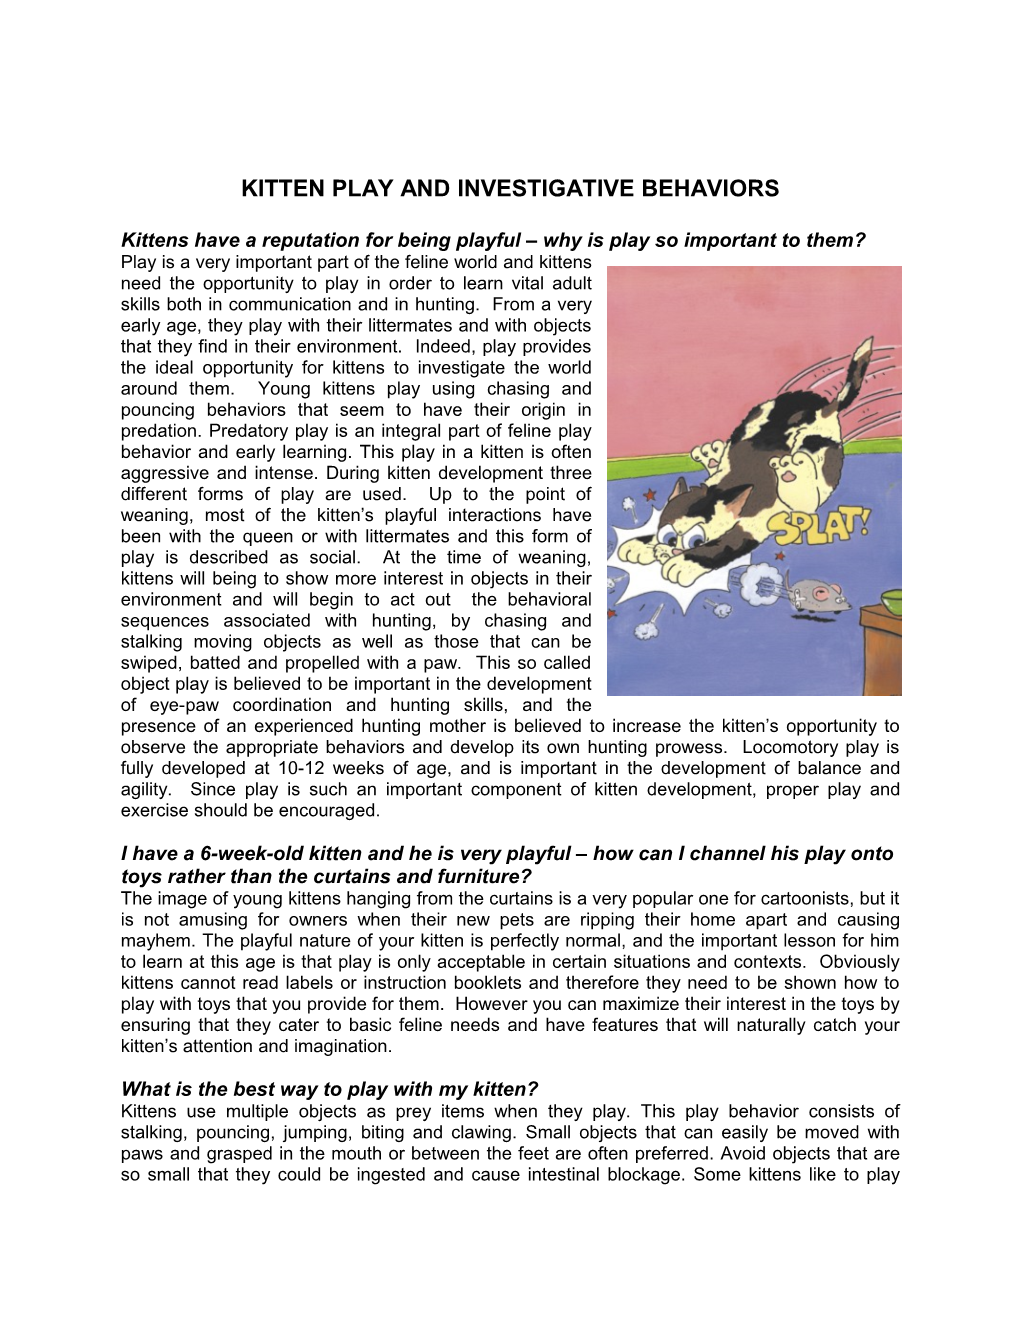 Kitten Play and Investigative Behaviors